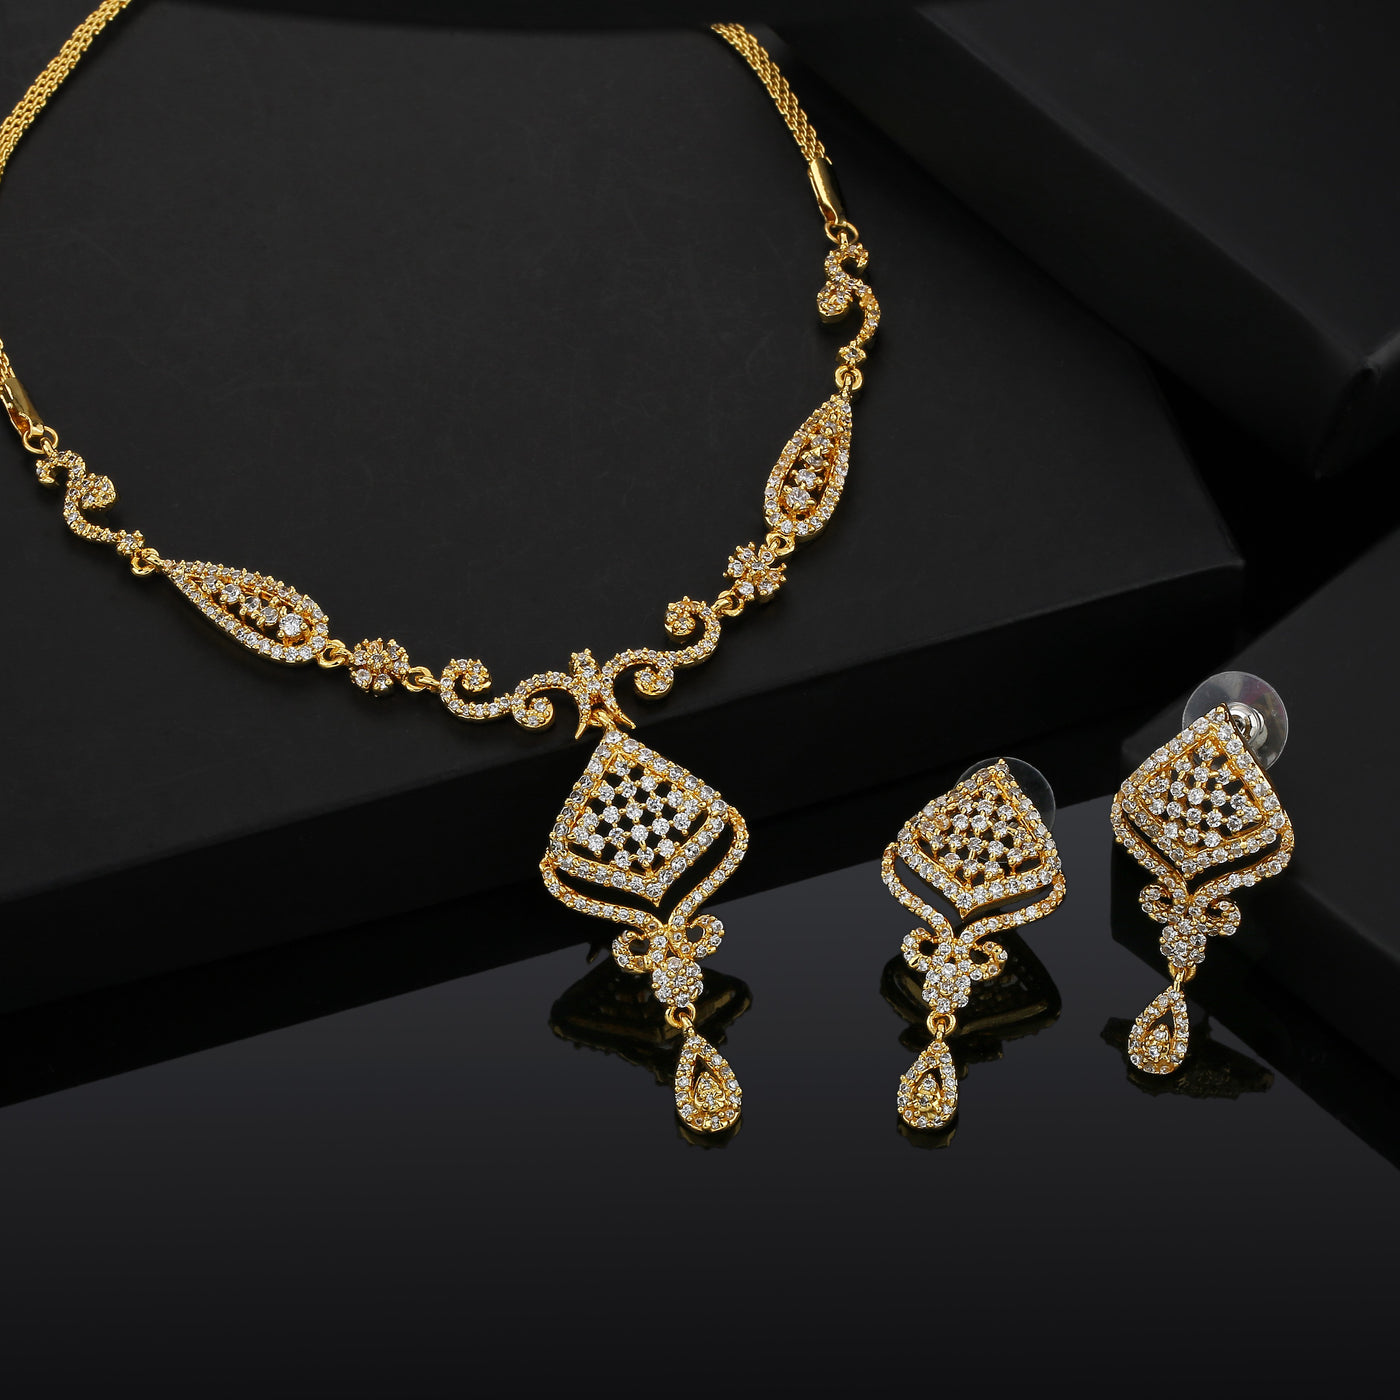 Estele 24 Kt Gold Plated Halo American Diamond Necklace Set for Women